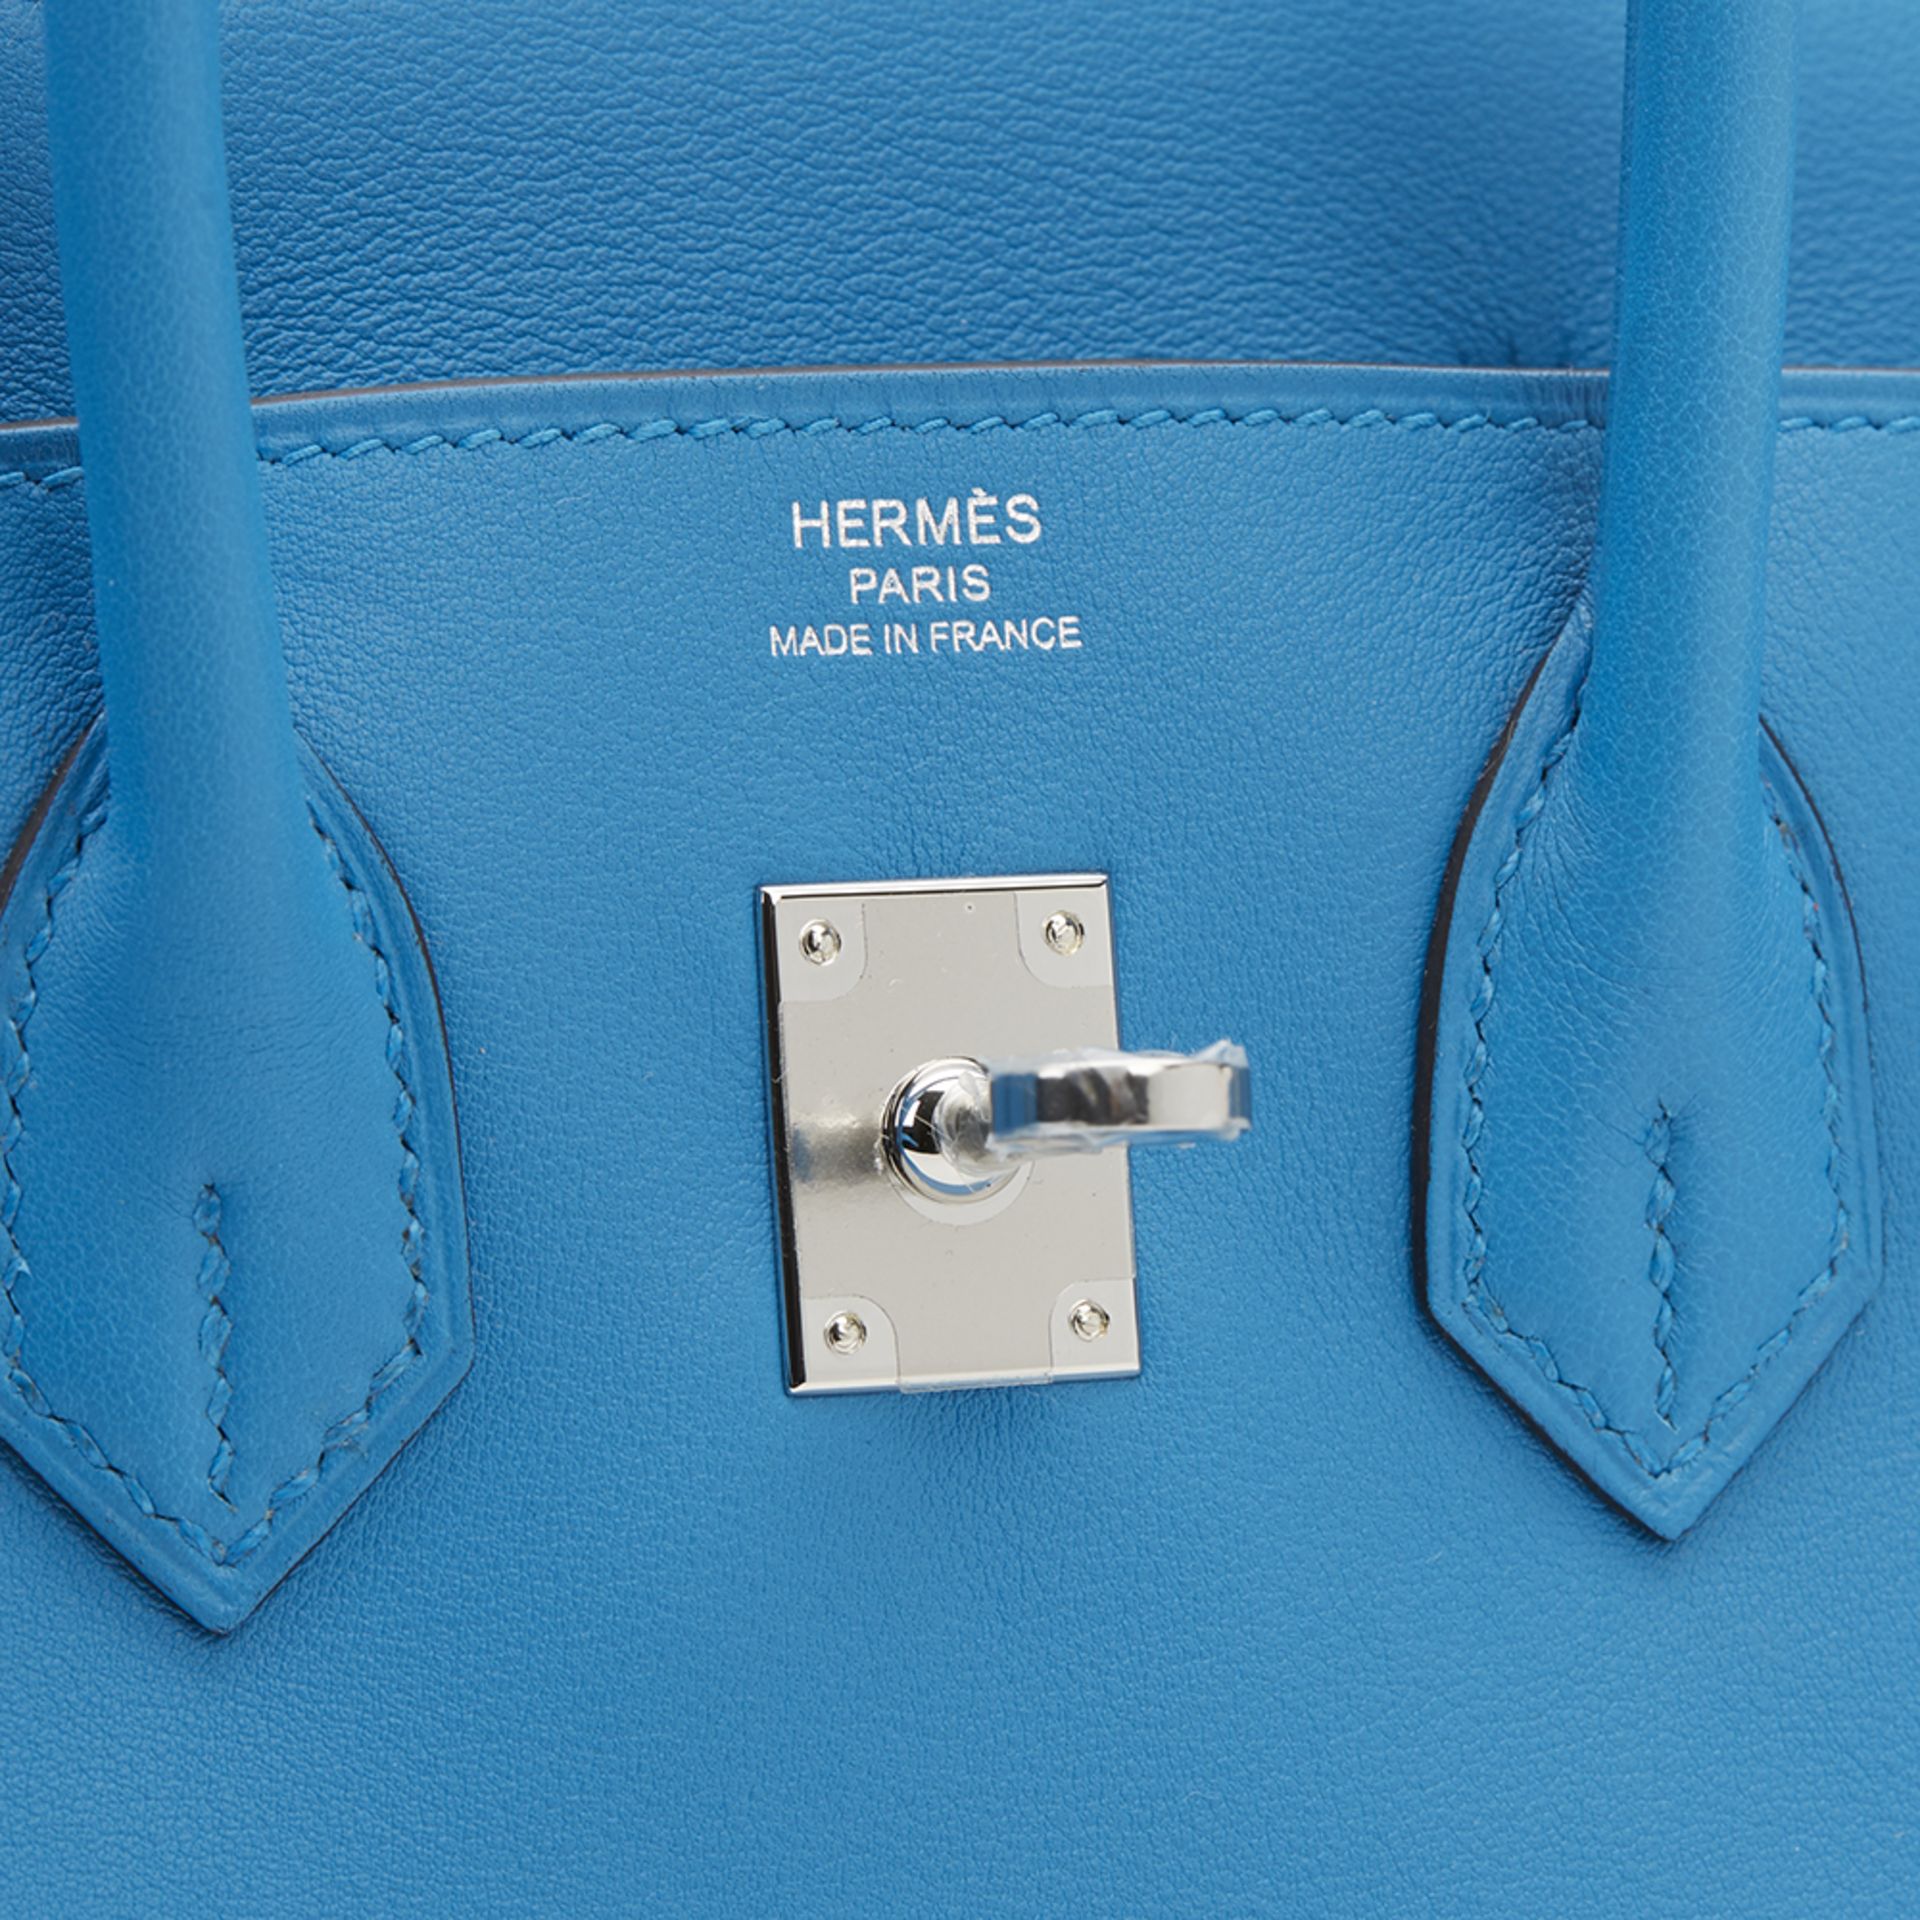 Hermes Birkin 25cm - Image 7 of 10